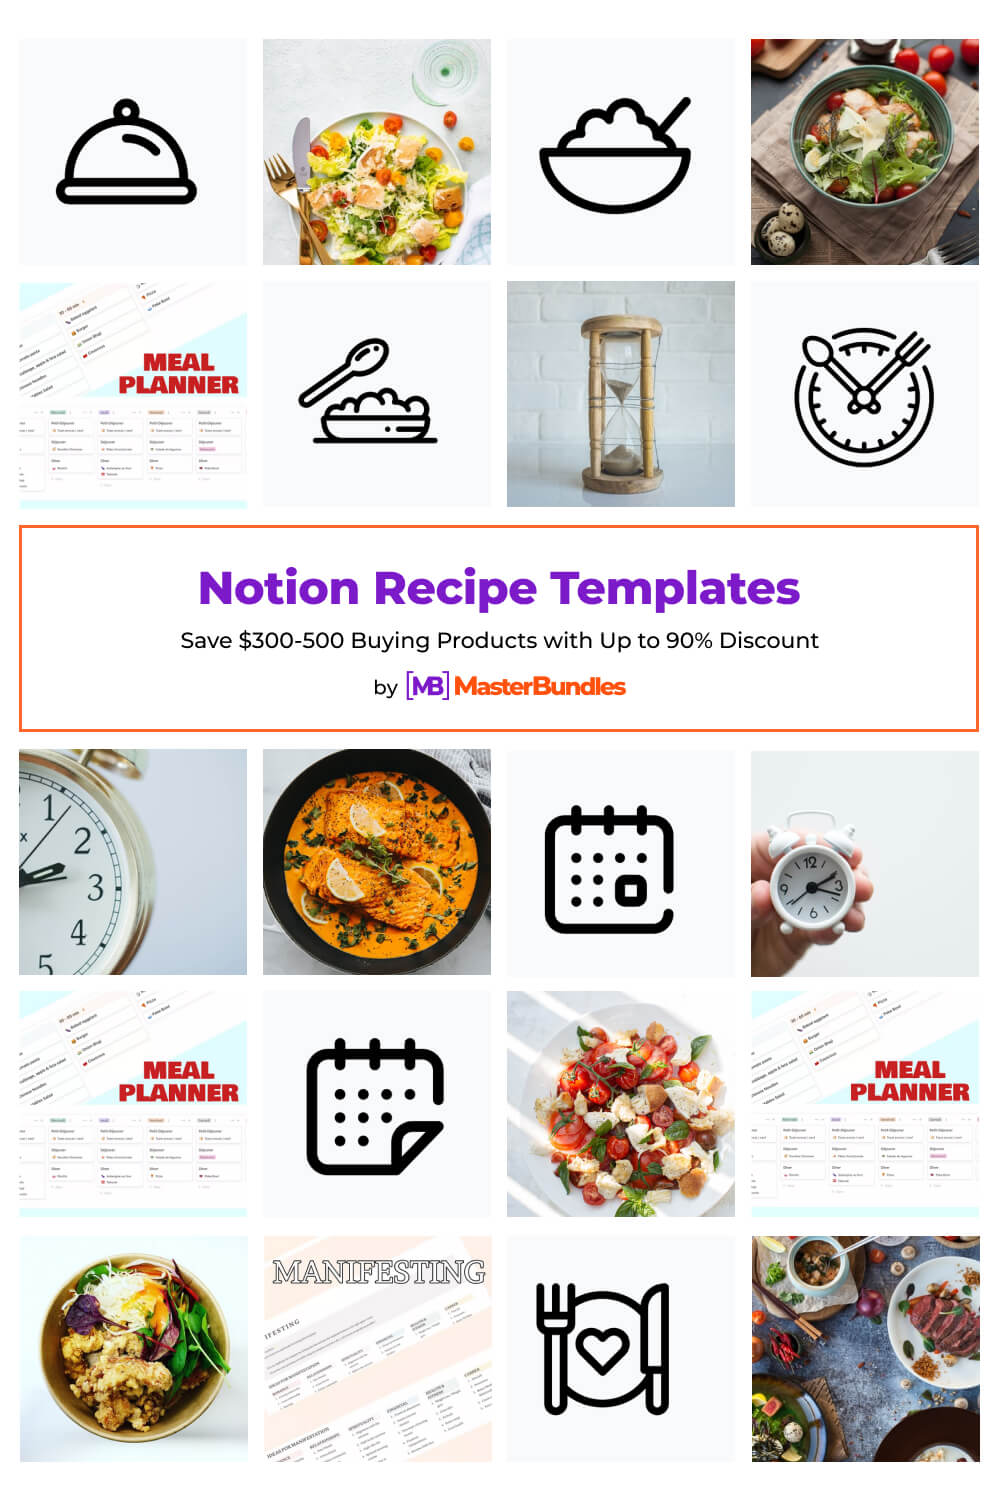 notion recipe templates pinterest image.